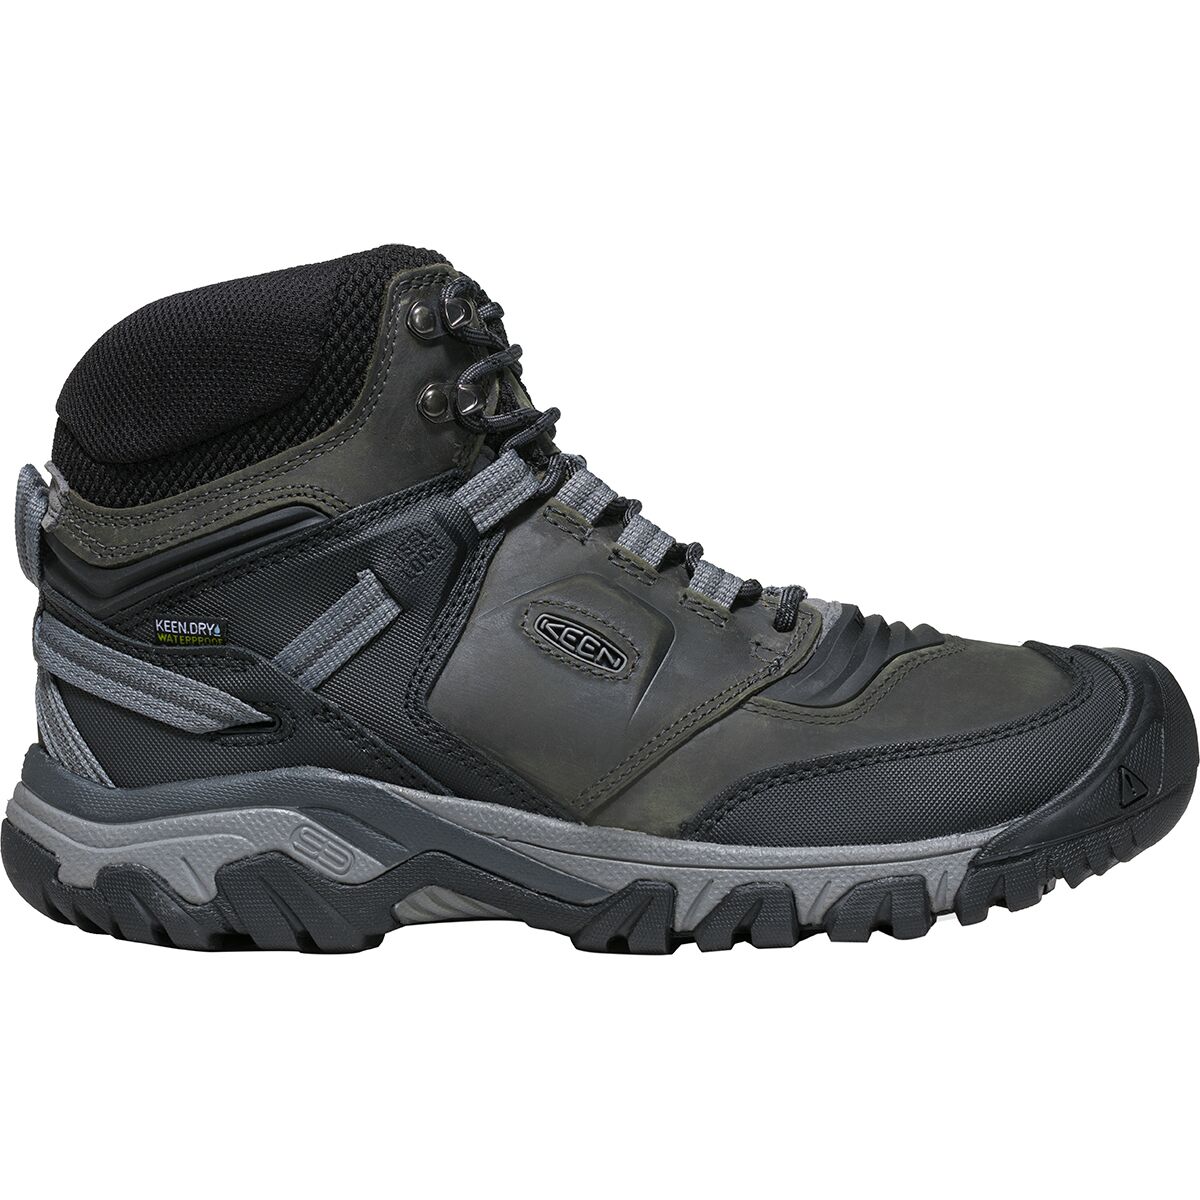 KEEN Ridge Flex Mid WP Hiking Boot - Men's